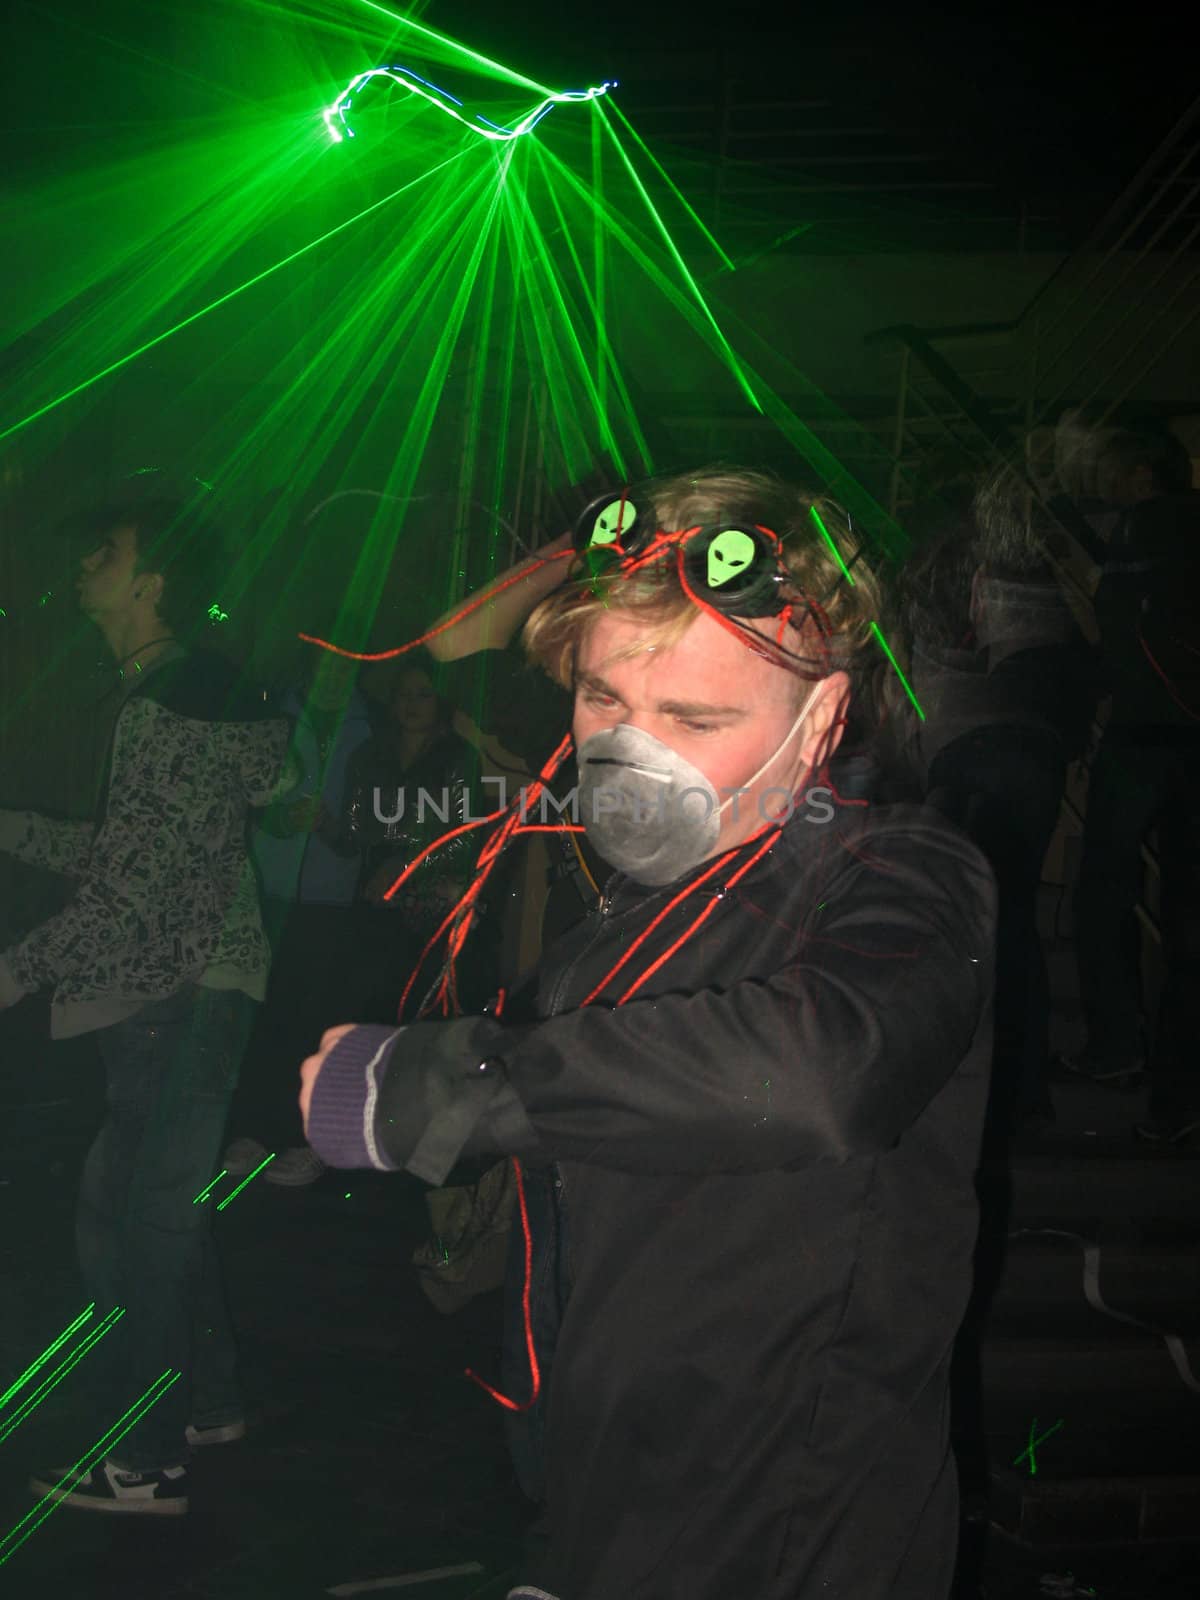 Dancing boy in a gas mask